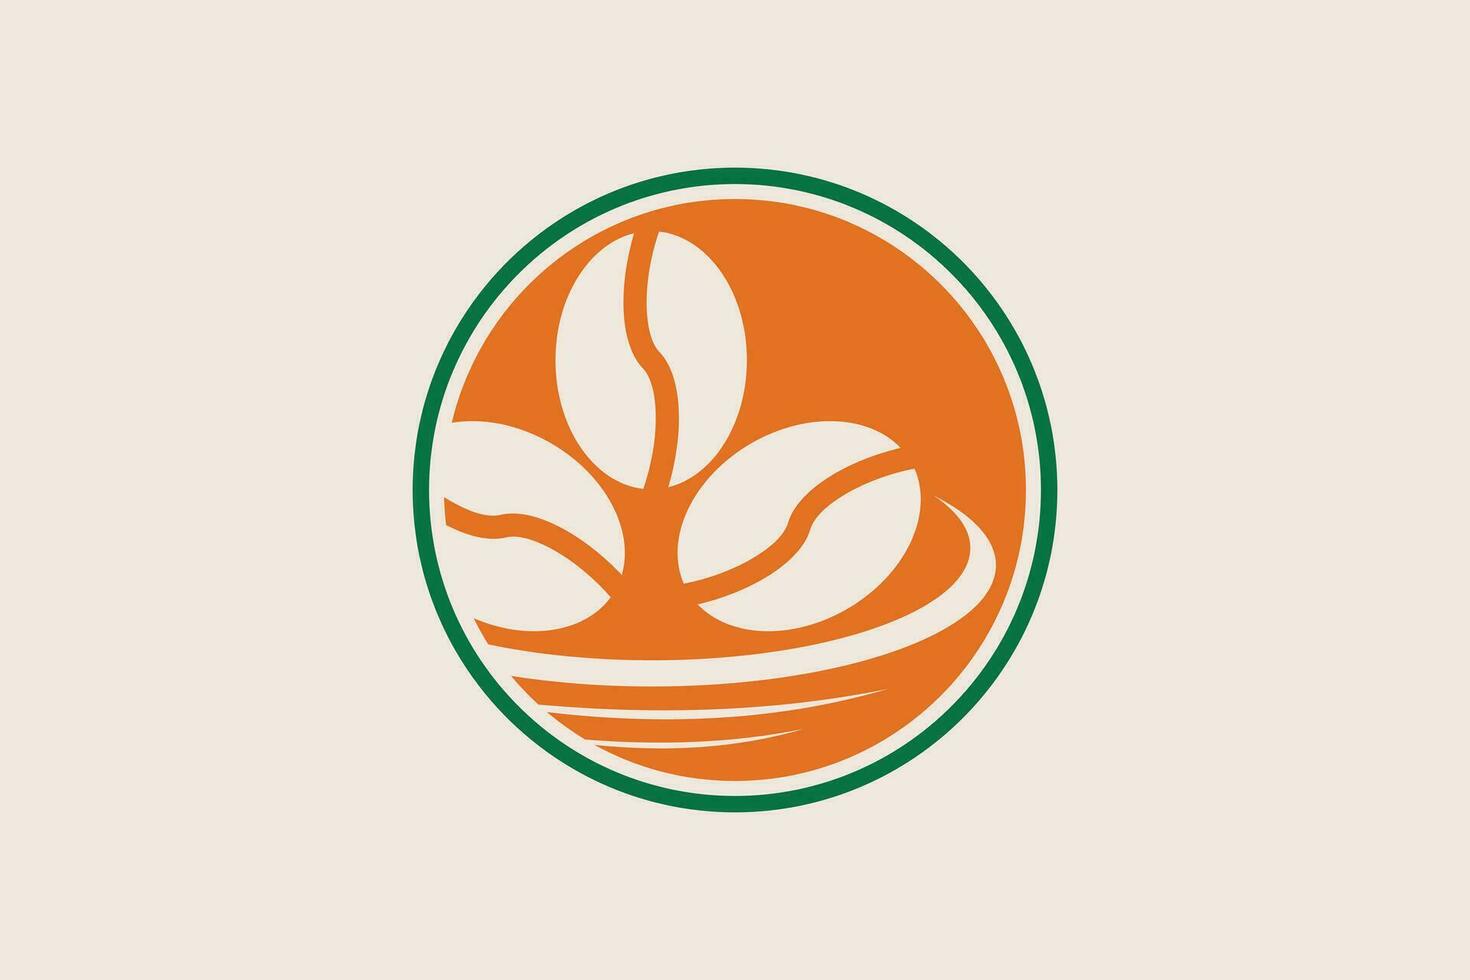 café logo conception vecteur illustraton